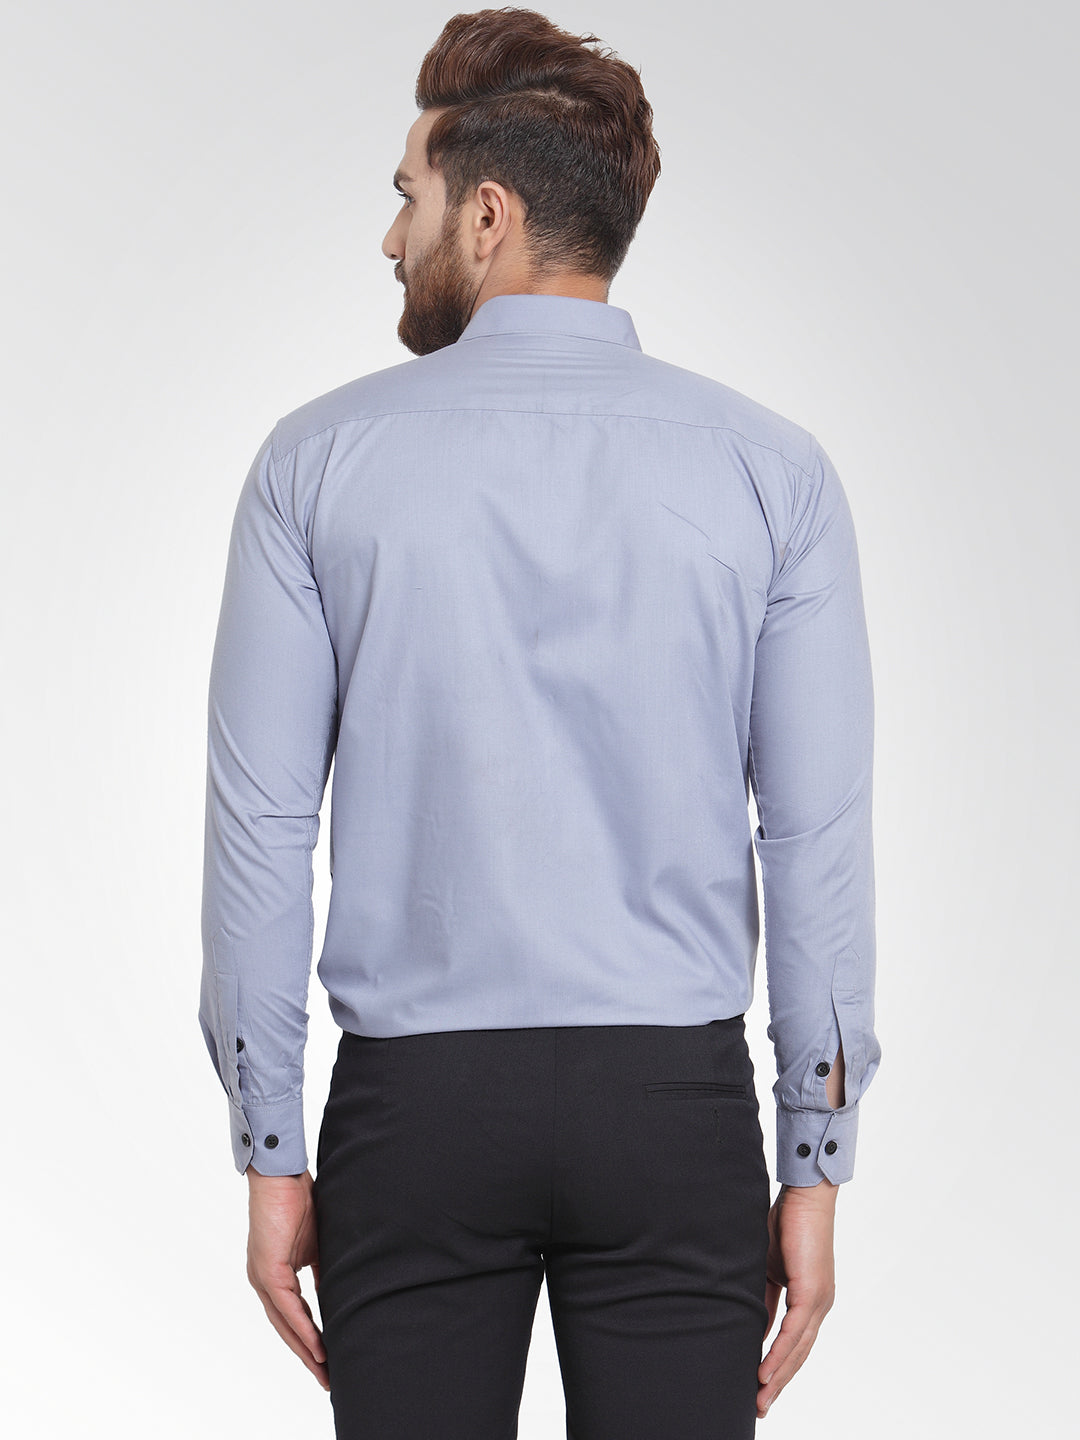 Men's Light Grey Formal Shirt with black detailing ( SF 411Light-Grey ) - Jainish